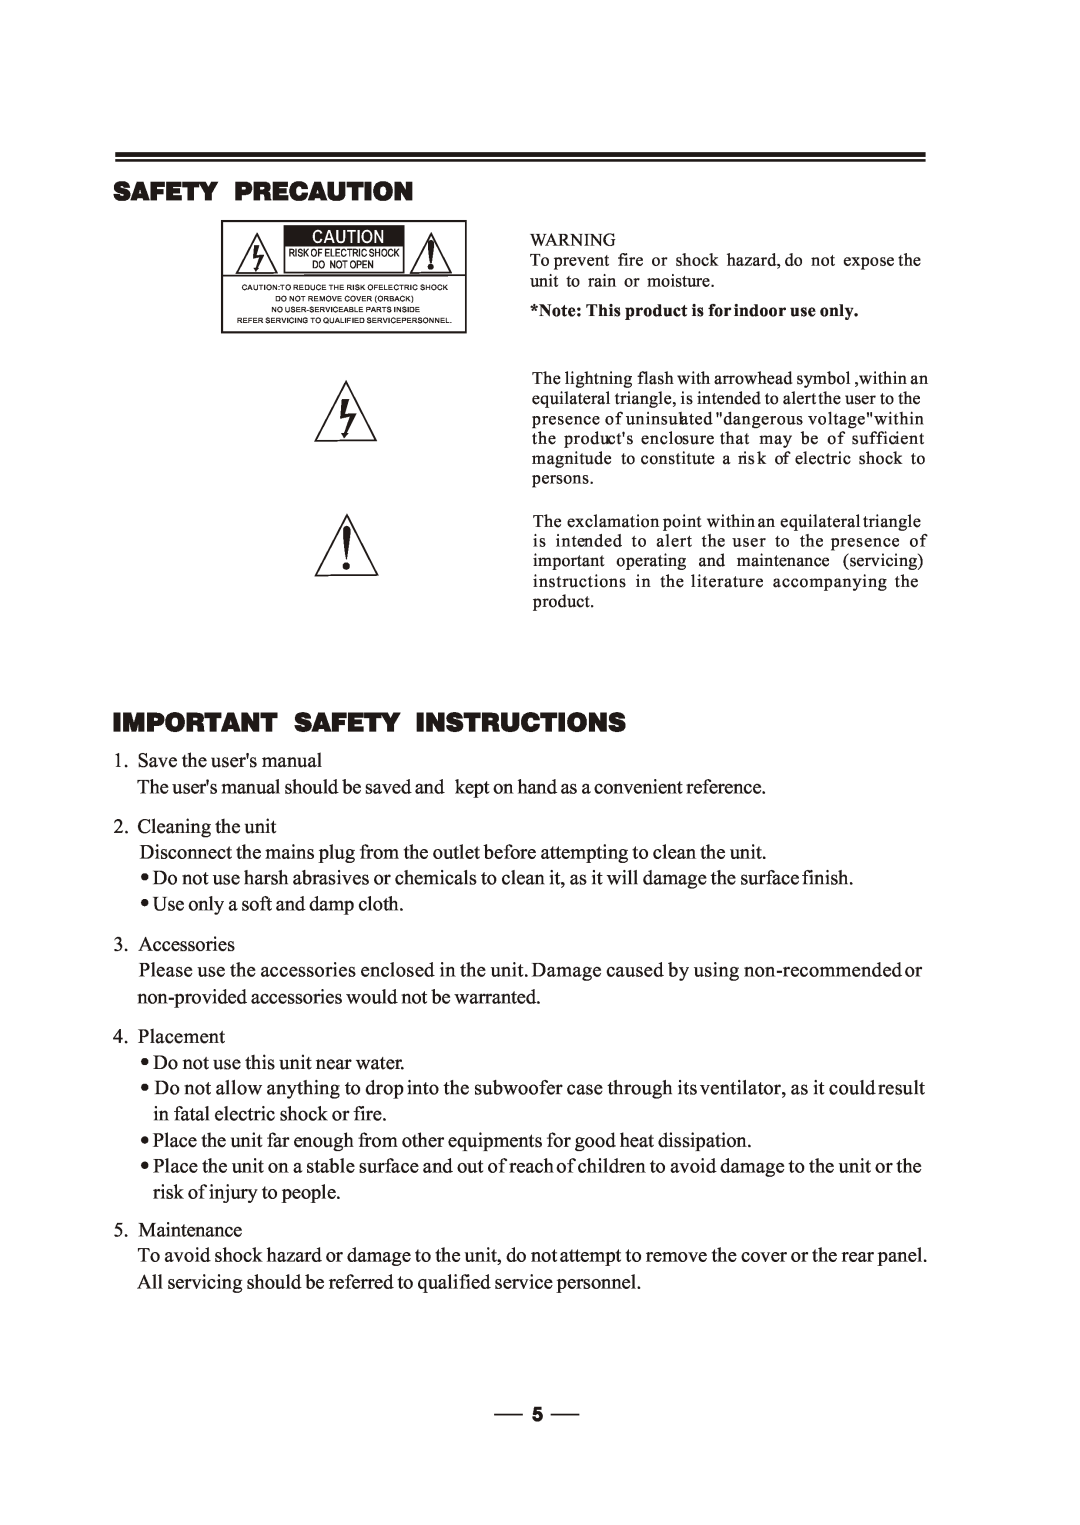 MidiLand 747H manual Safety Precaution 